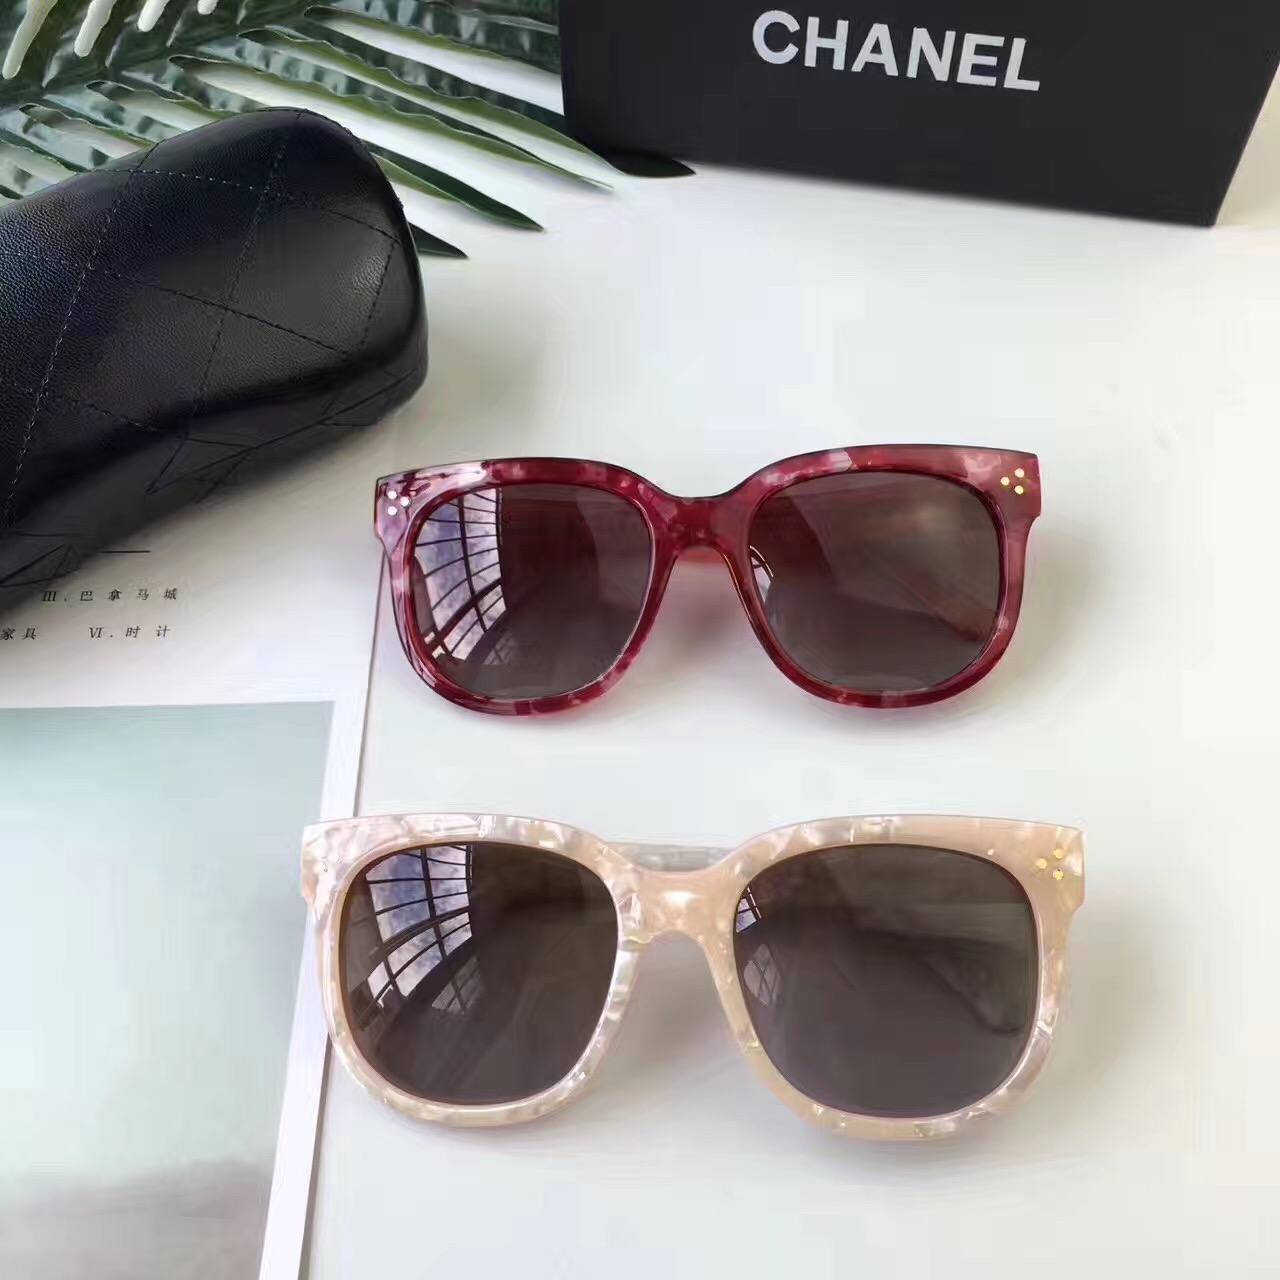 Chanel 香奈儿女士太阳镜 特殊材质镜框